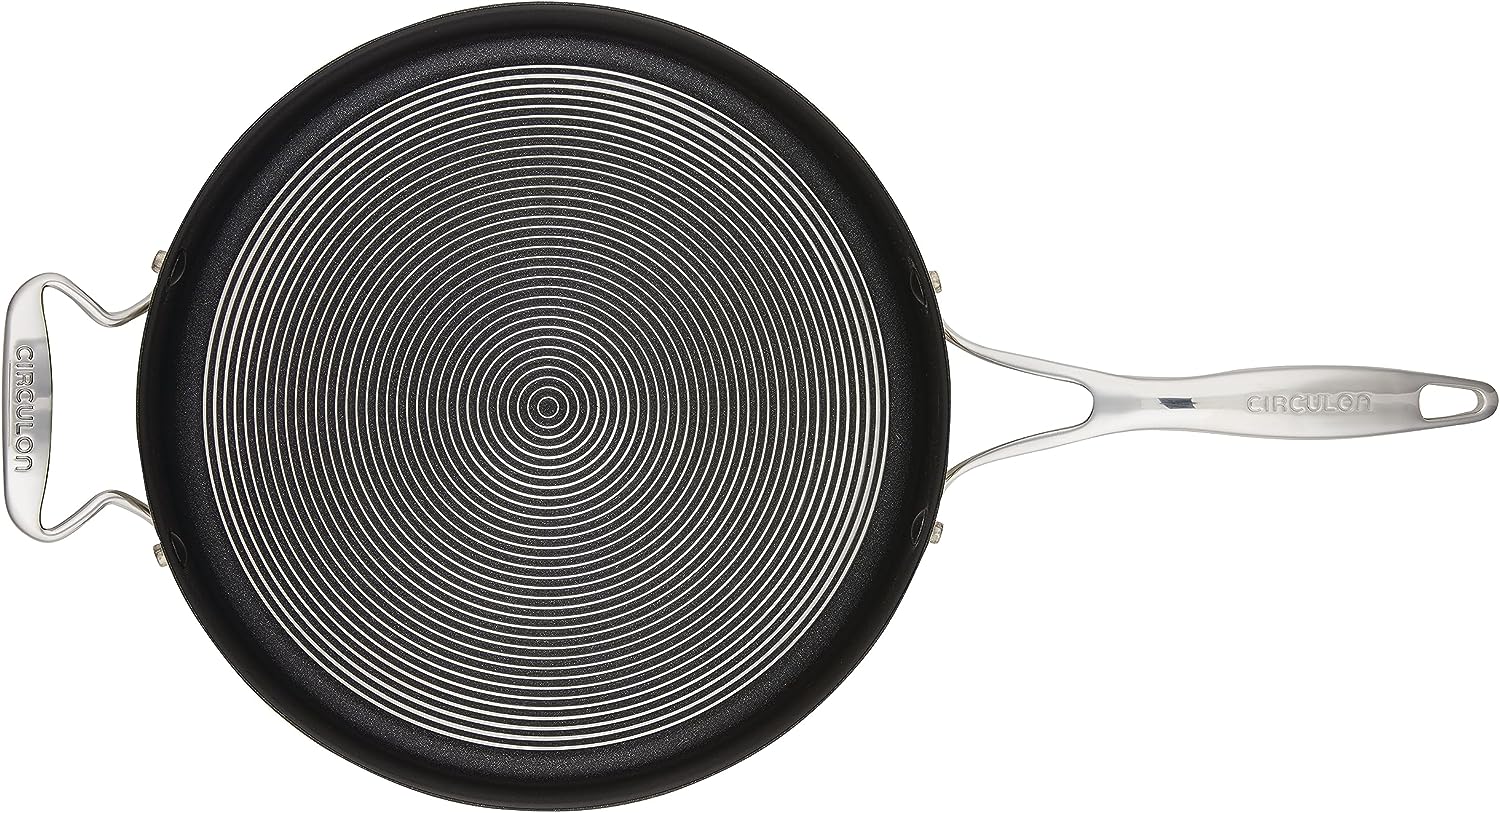 Circulon 30cm Frying Pan